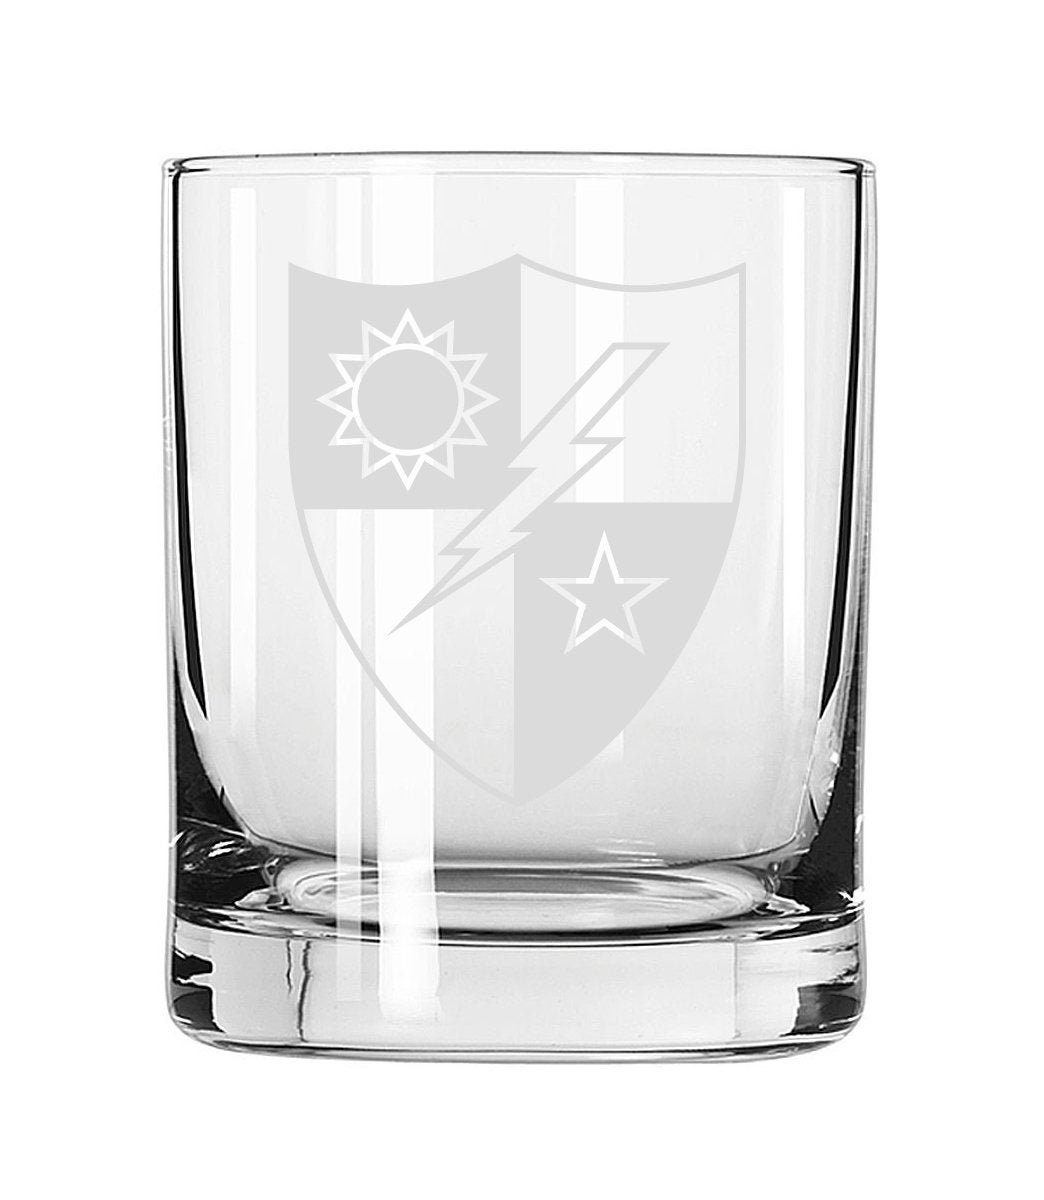 ABASOLO Collectible Whiskey Glass 8 Oz